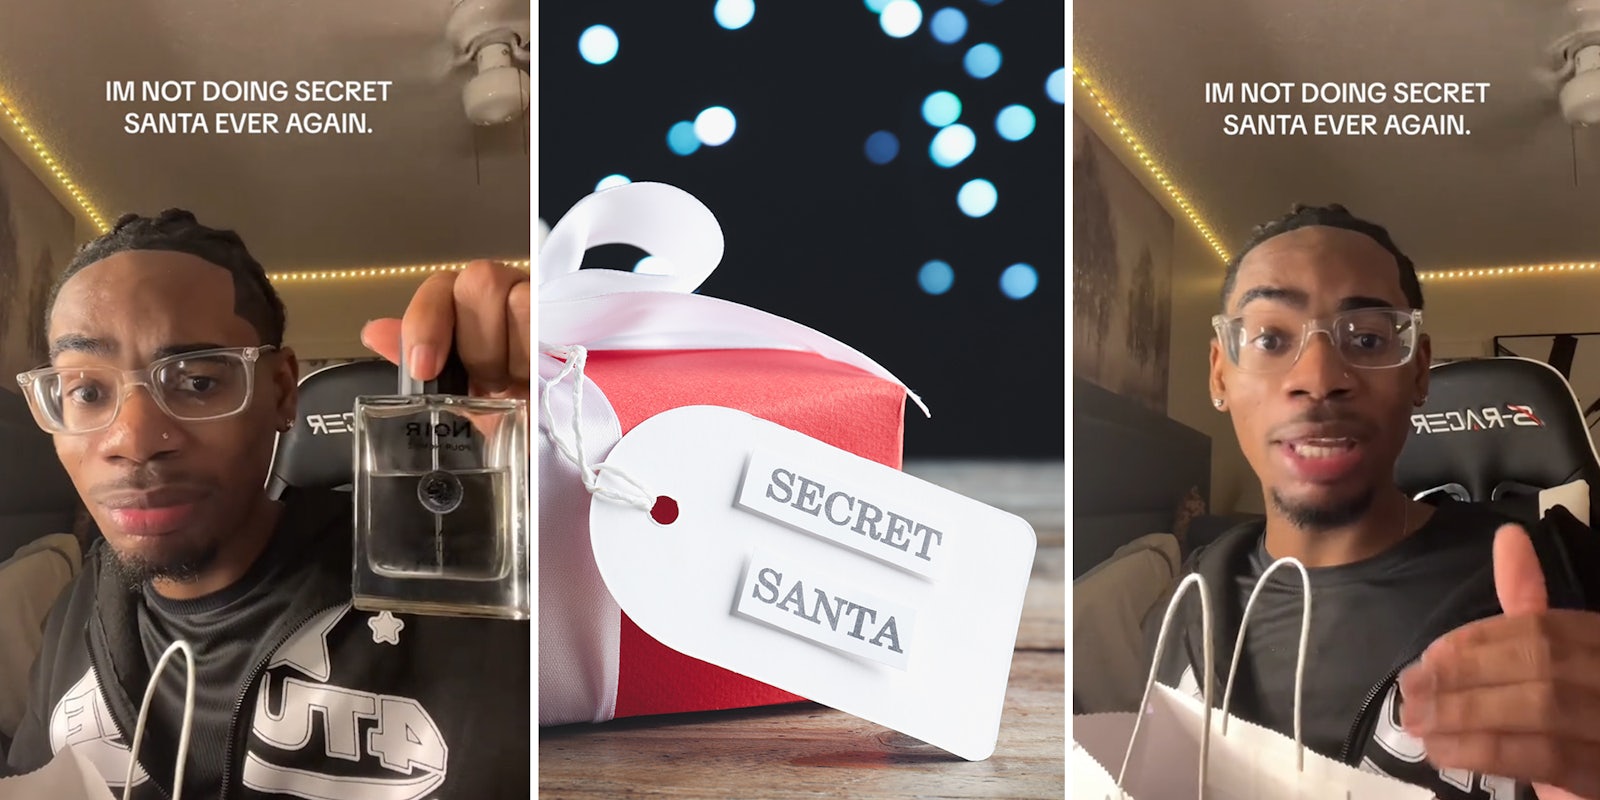 Man’s Secret Santa has a $50 budget. He’s furious after getting an assortment of name-brand items